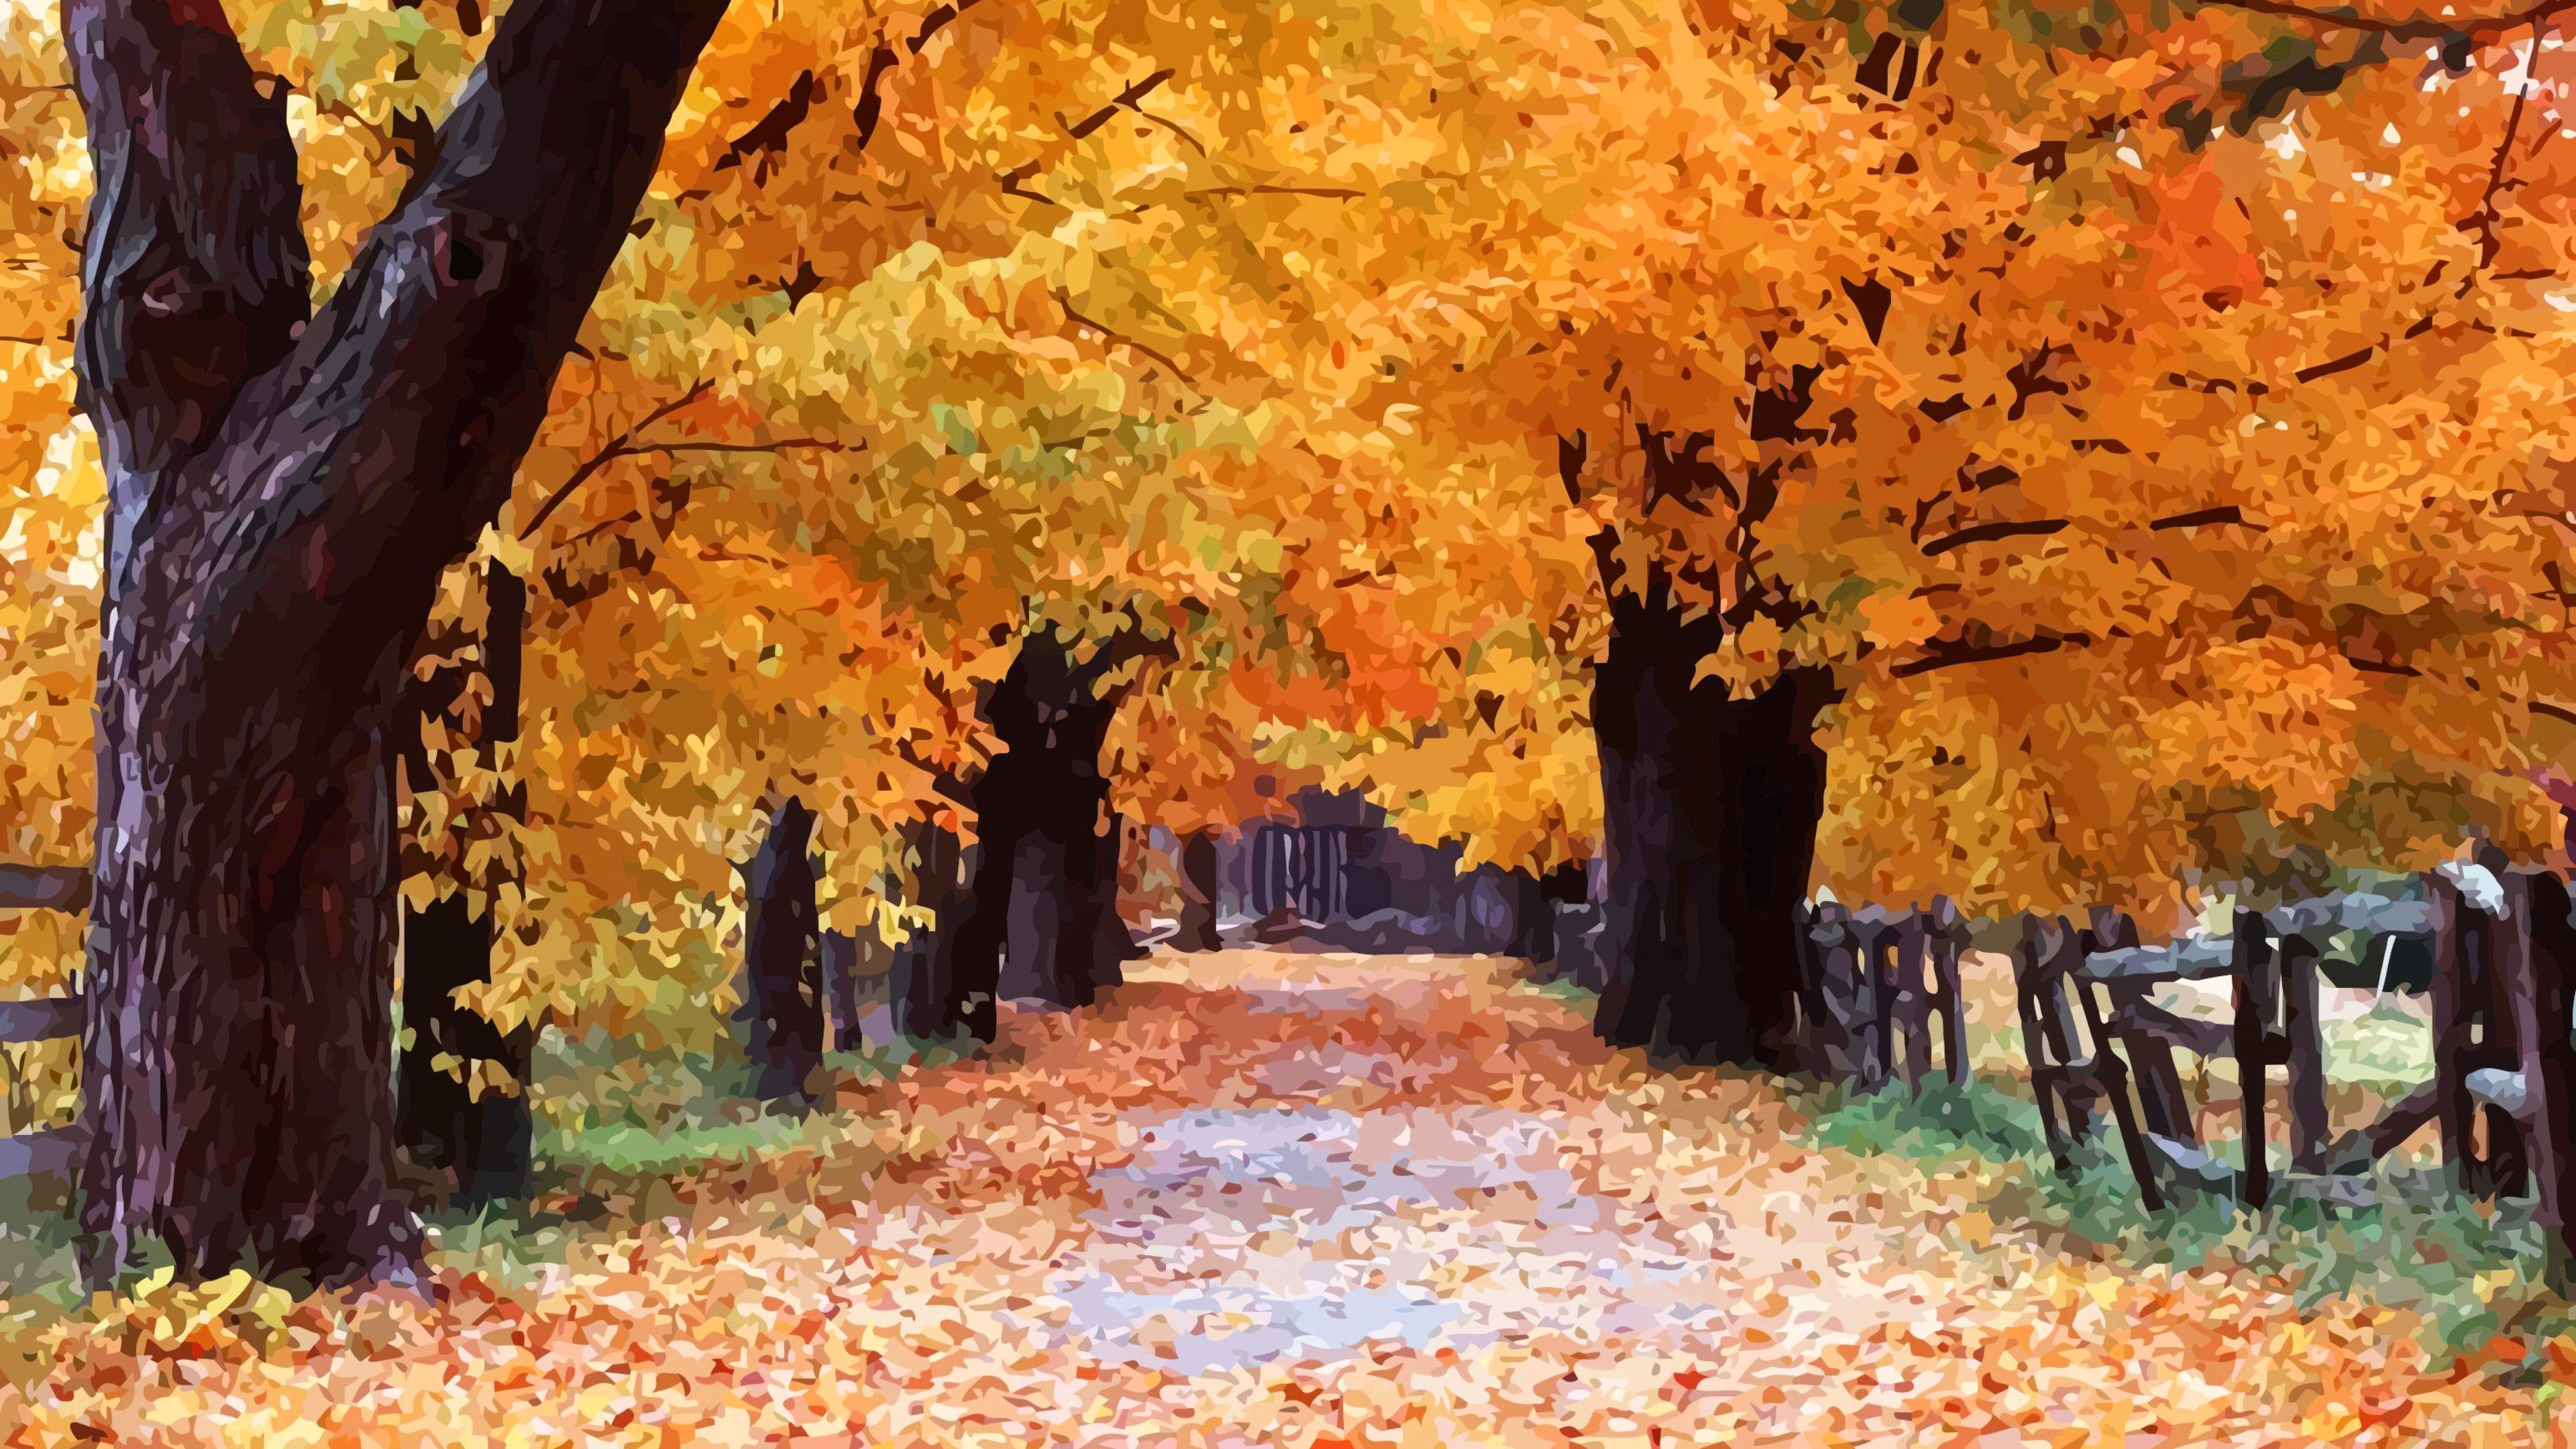 Autumn XP 4K wallpaper. Autumn wallpaper hd, Good morning image, Free desktop wallpaper